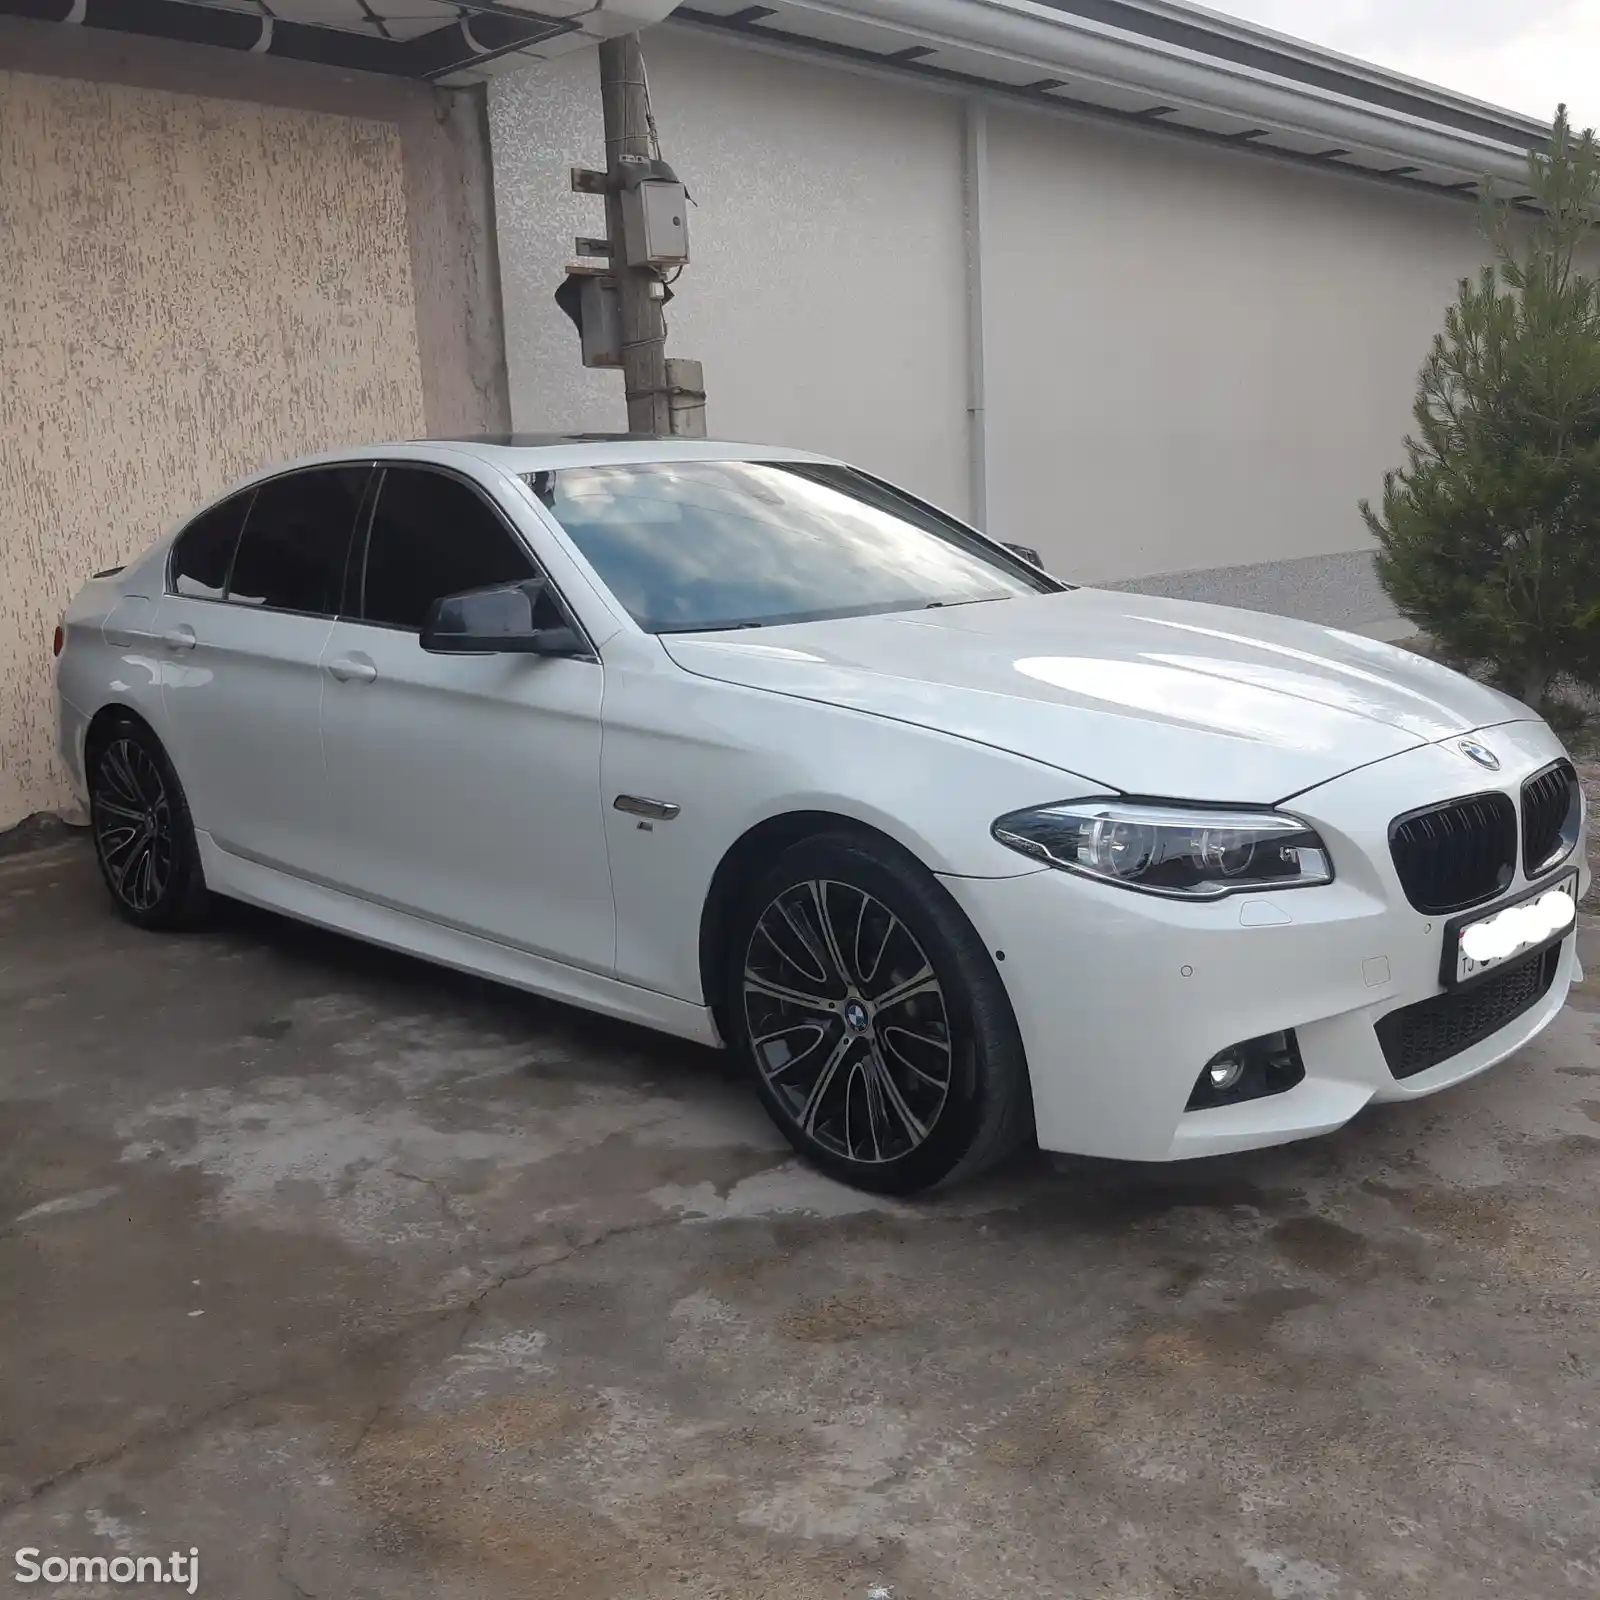 BMW 5 series, 2013-14